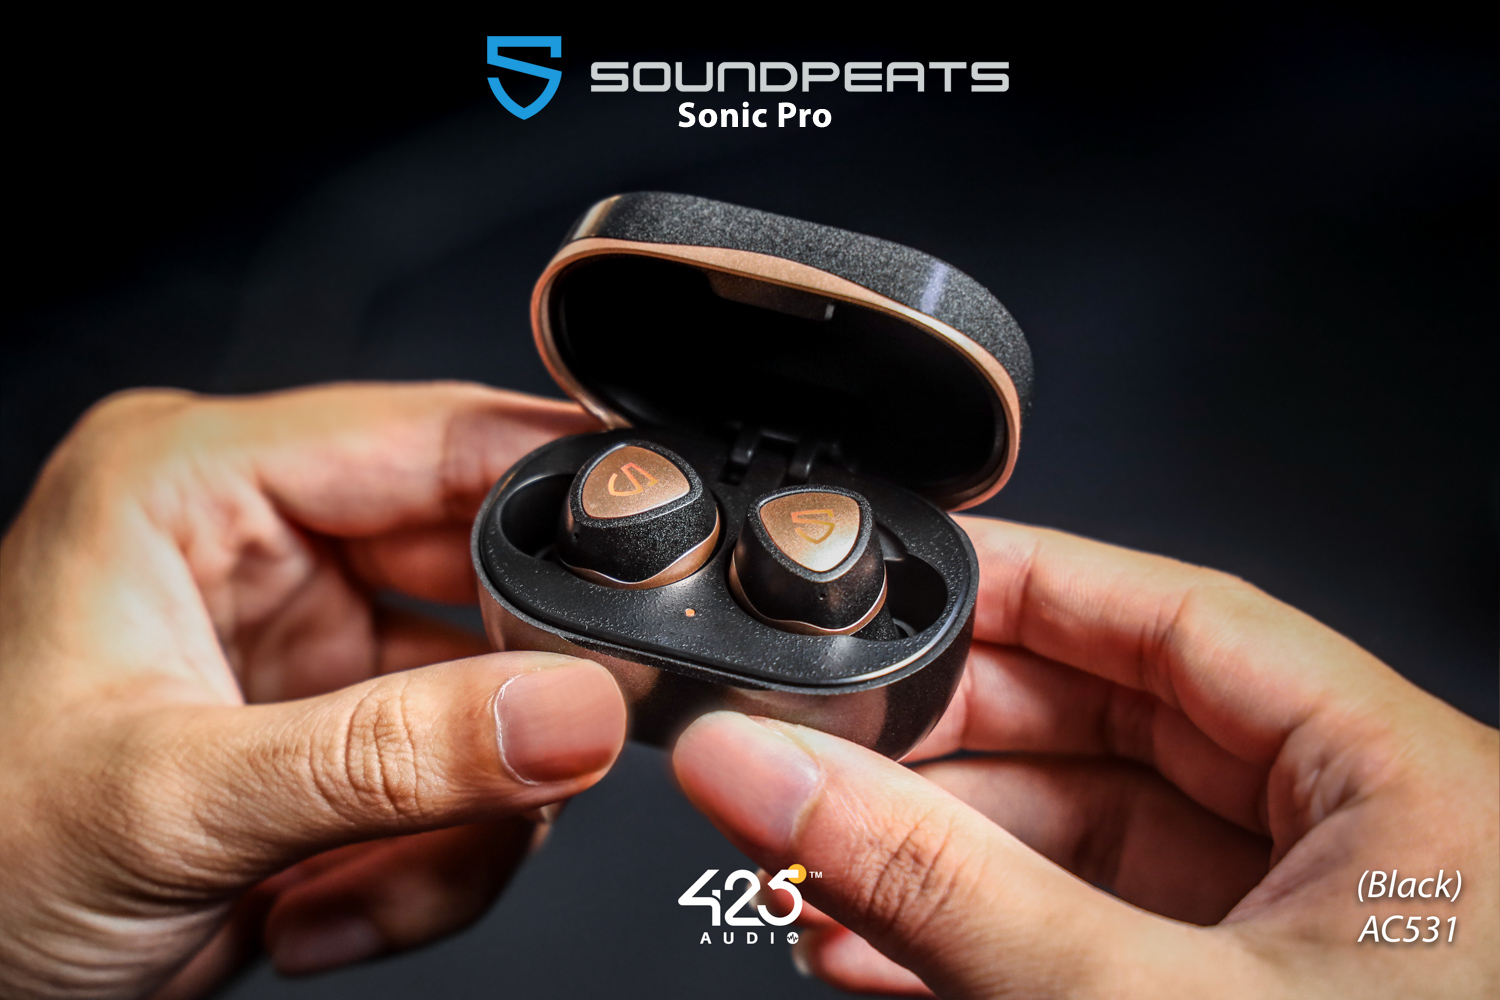 soundpeats sonic pro,soundpeats,black,bluetooth,5.2,aptx adaptive,dual ba,low latency game mode,เสียงดี,เบสหนัก